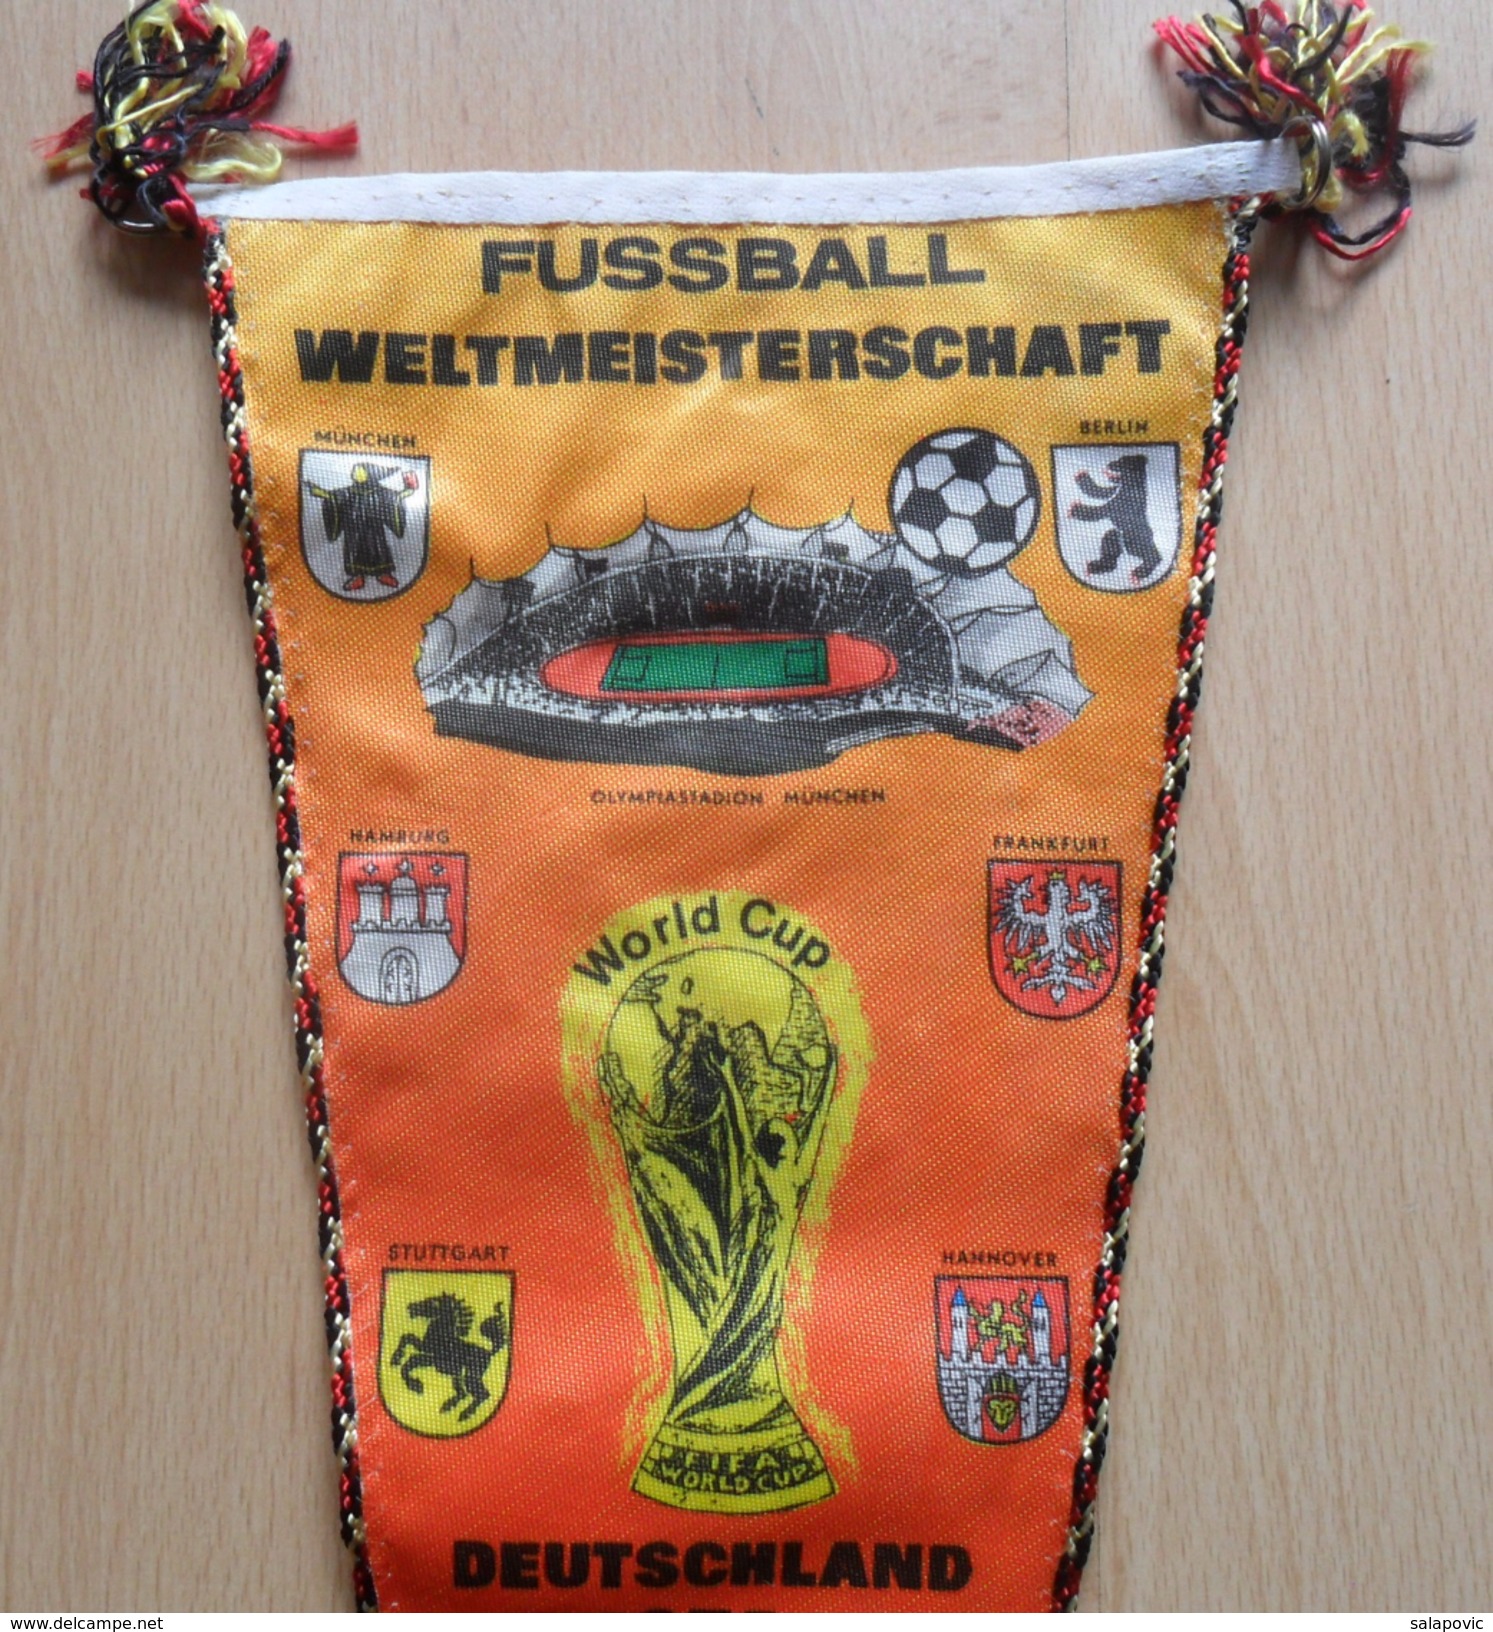 FUßBALL WELTMEISTERSCHAFT DEUTSCHLAND 1974, FOOTBALL WORLD CHAMPIONSHIP GERMANY 1974 OLD PENNANT - Kleding, Souvenirs & Andere